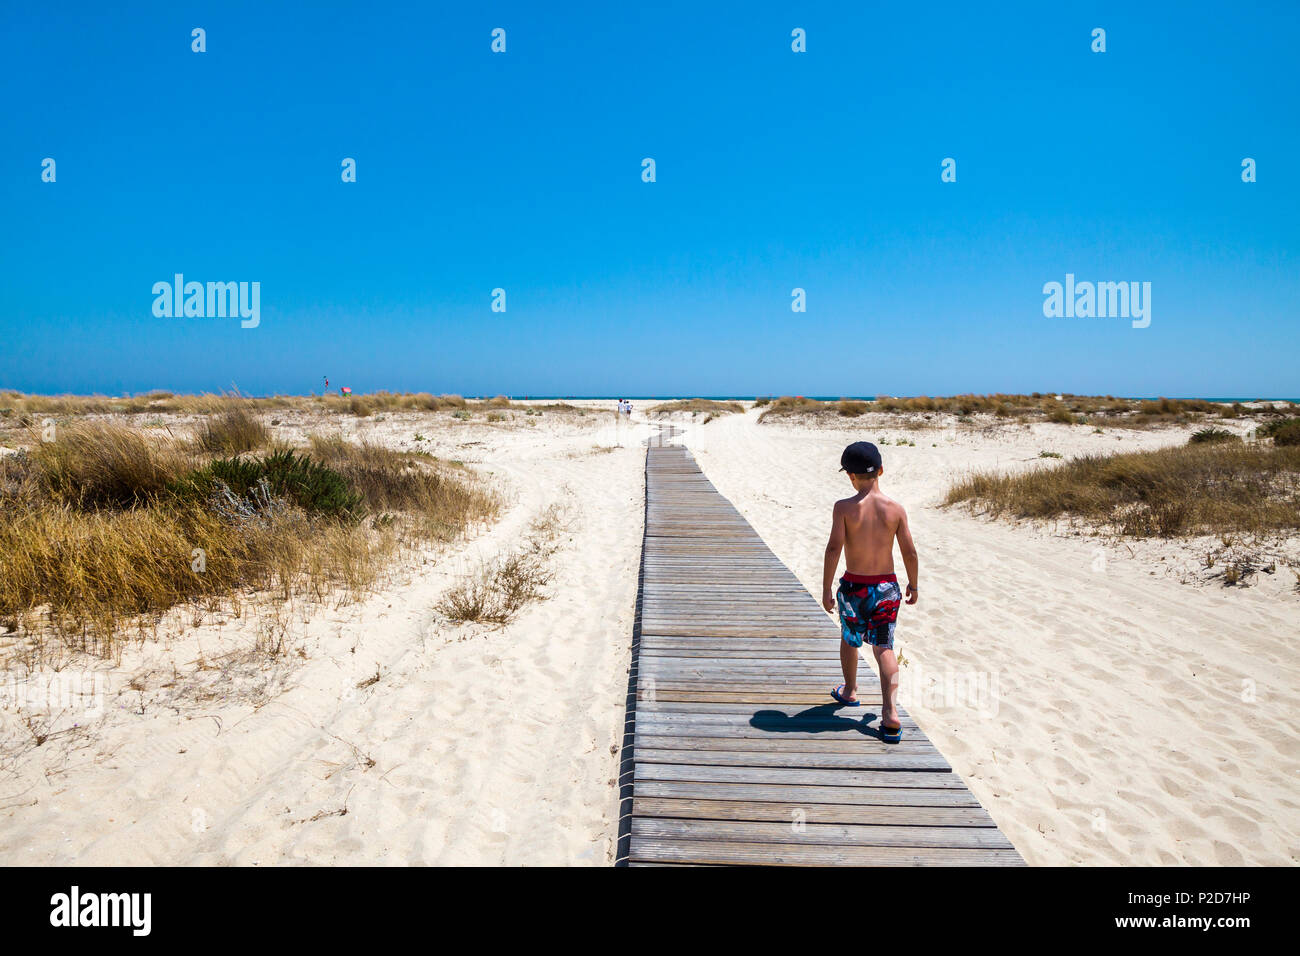 Boy on a boardwalk, walking to the beach, Armona island, Olhao, Algarve, Portugal Stock Photo